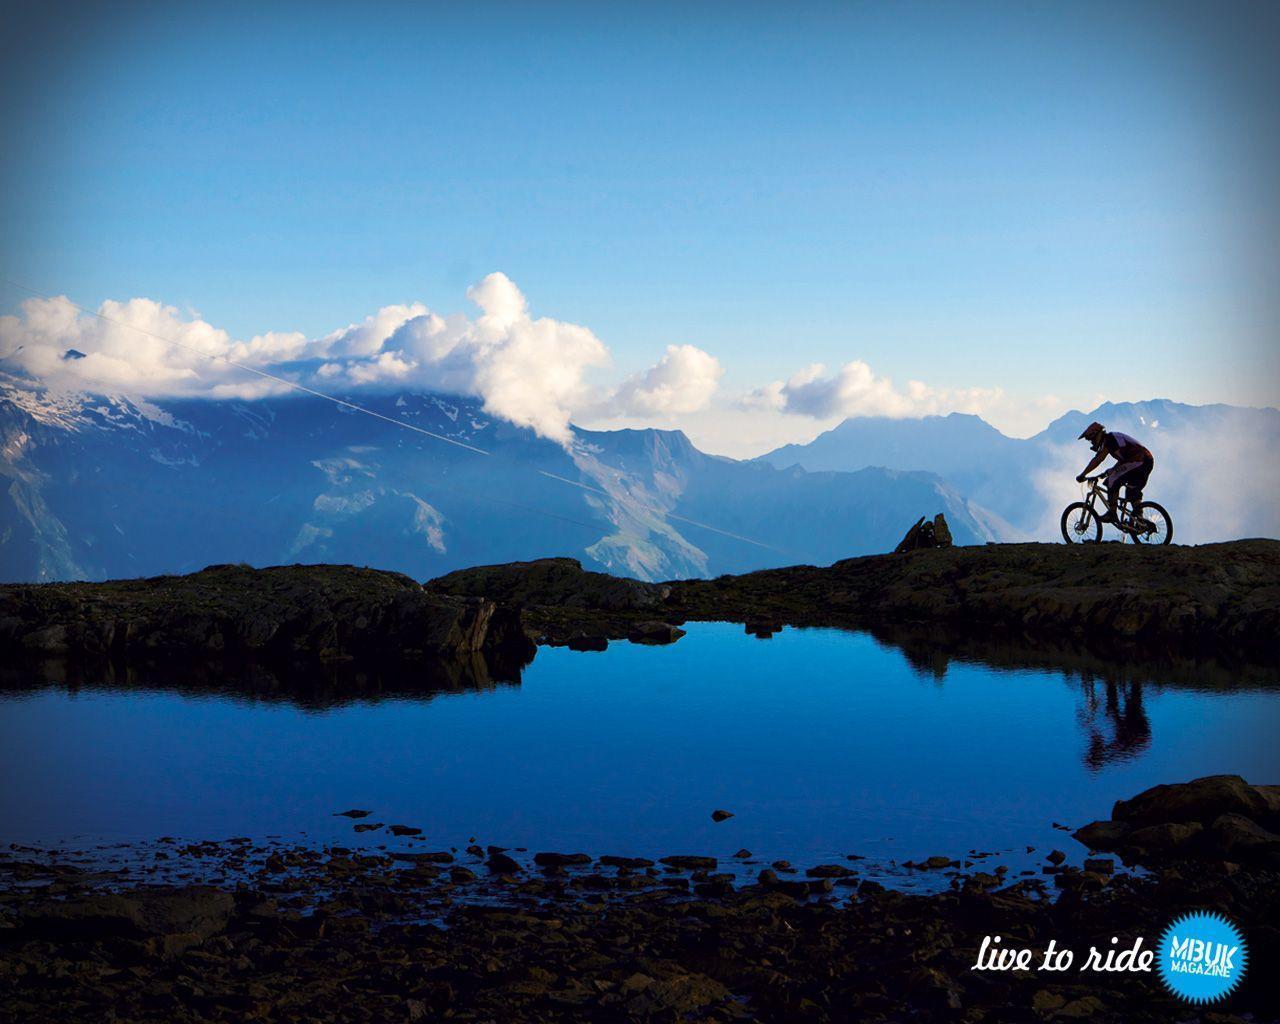 Mountain bike, downhill wallpaper + Life cicles AVI. Lets go